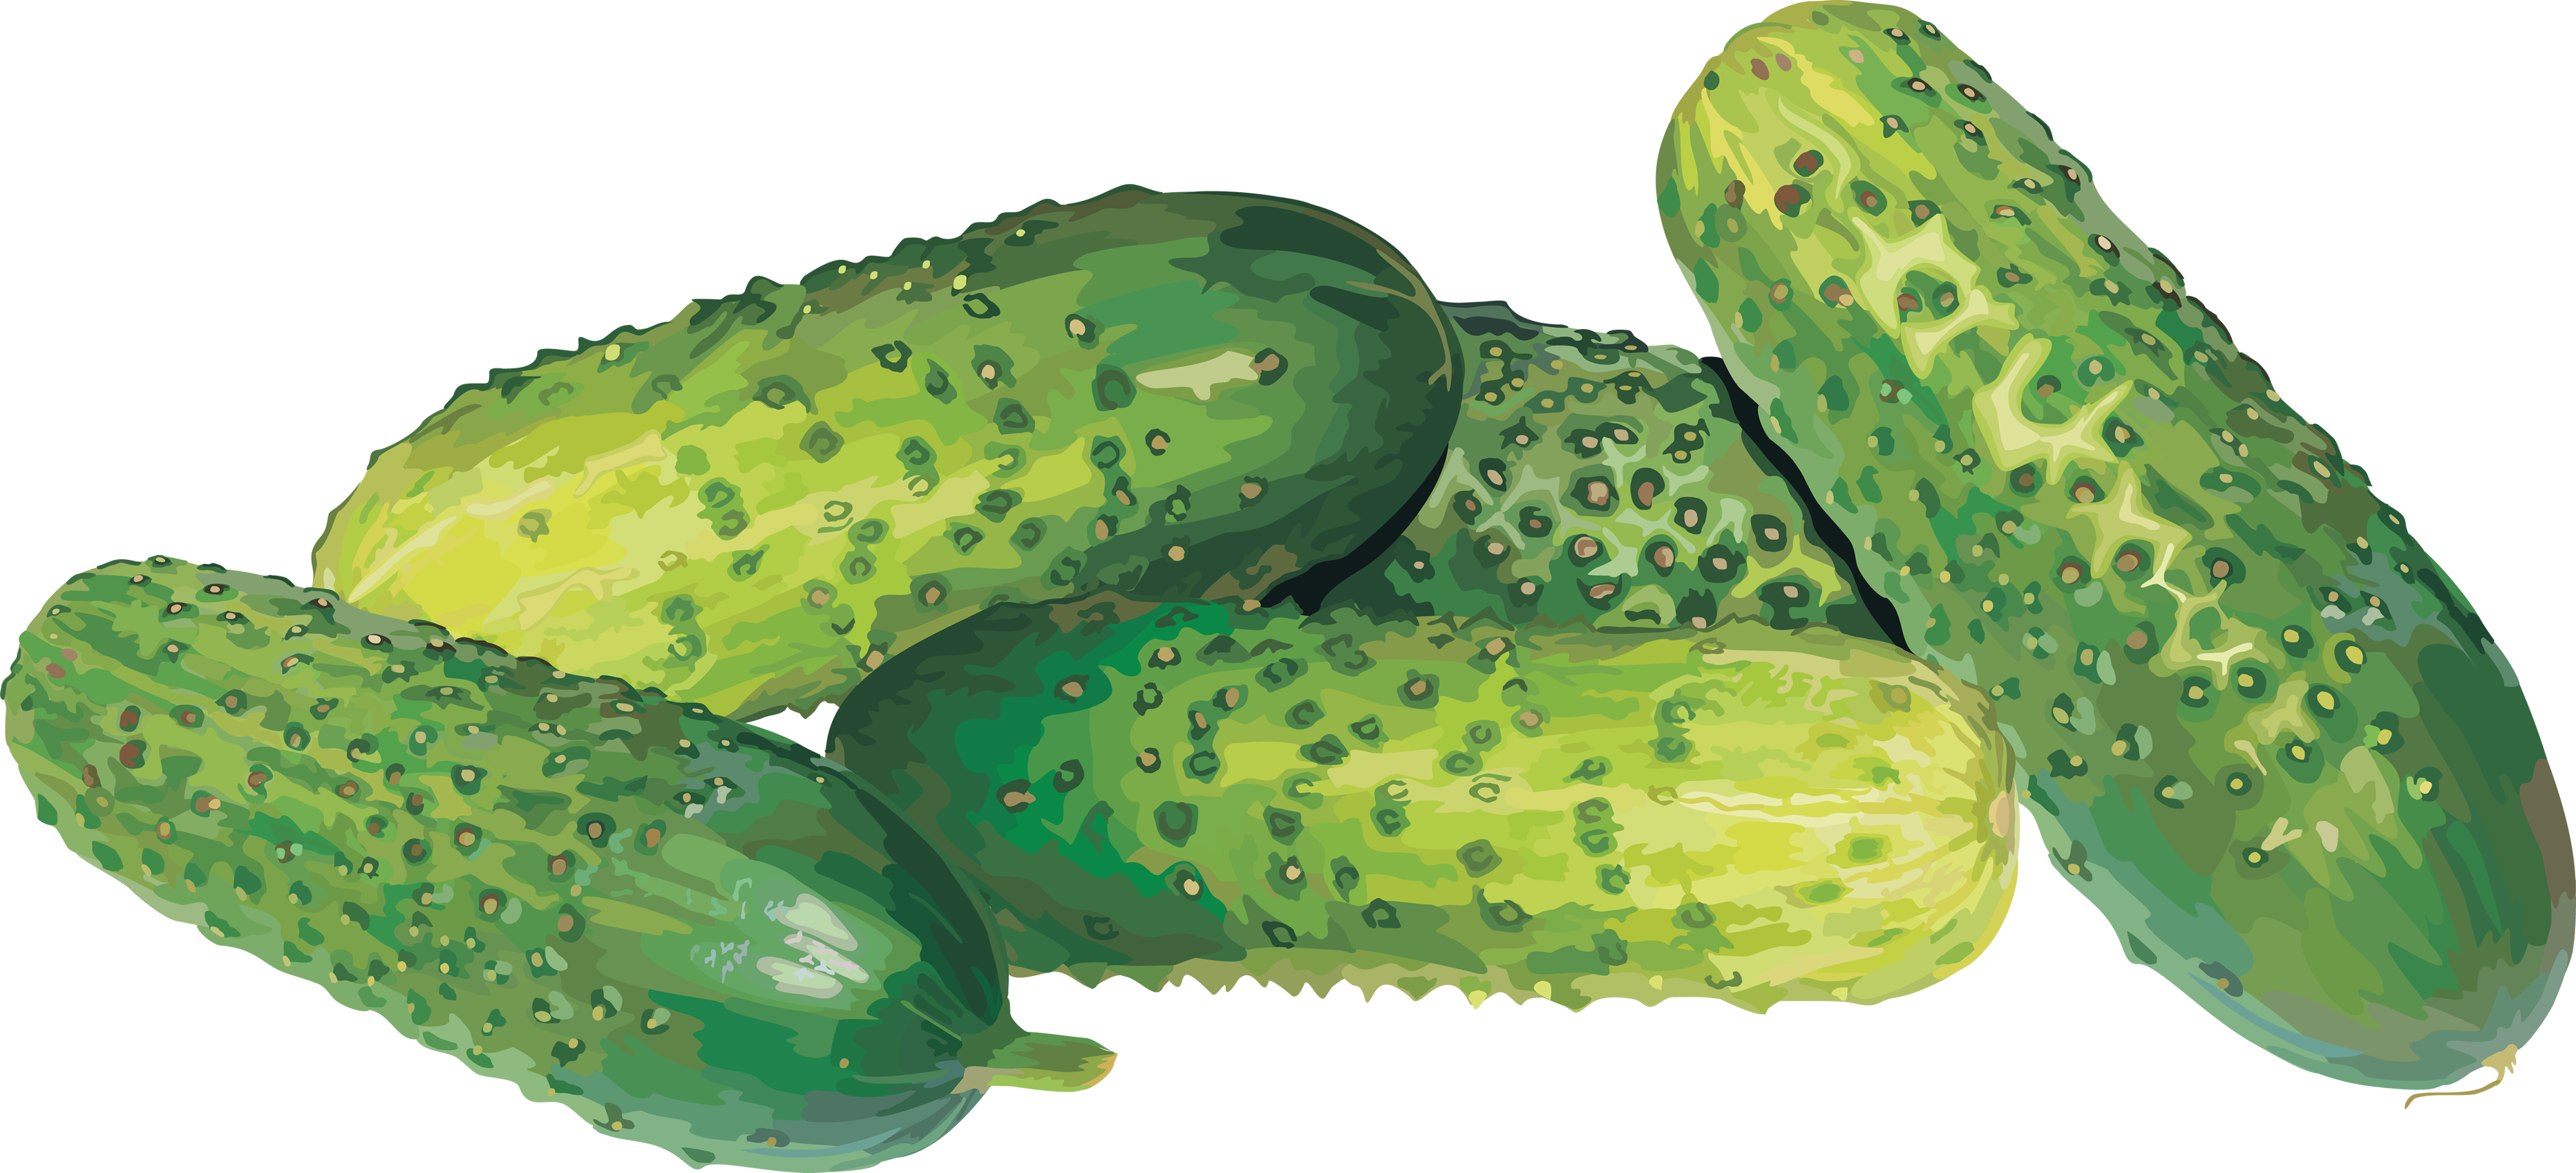 Cucumber Free Download Png PNG Image